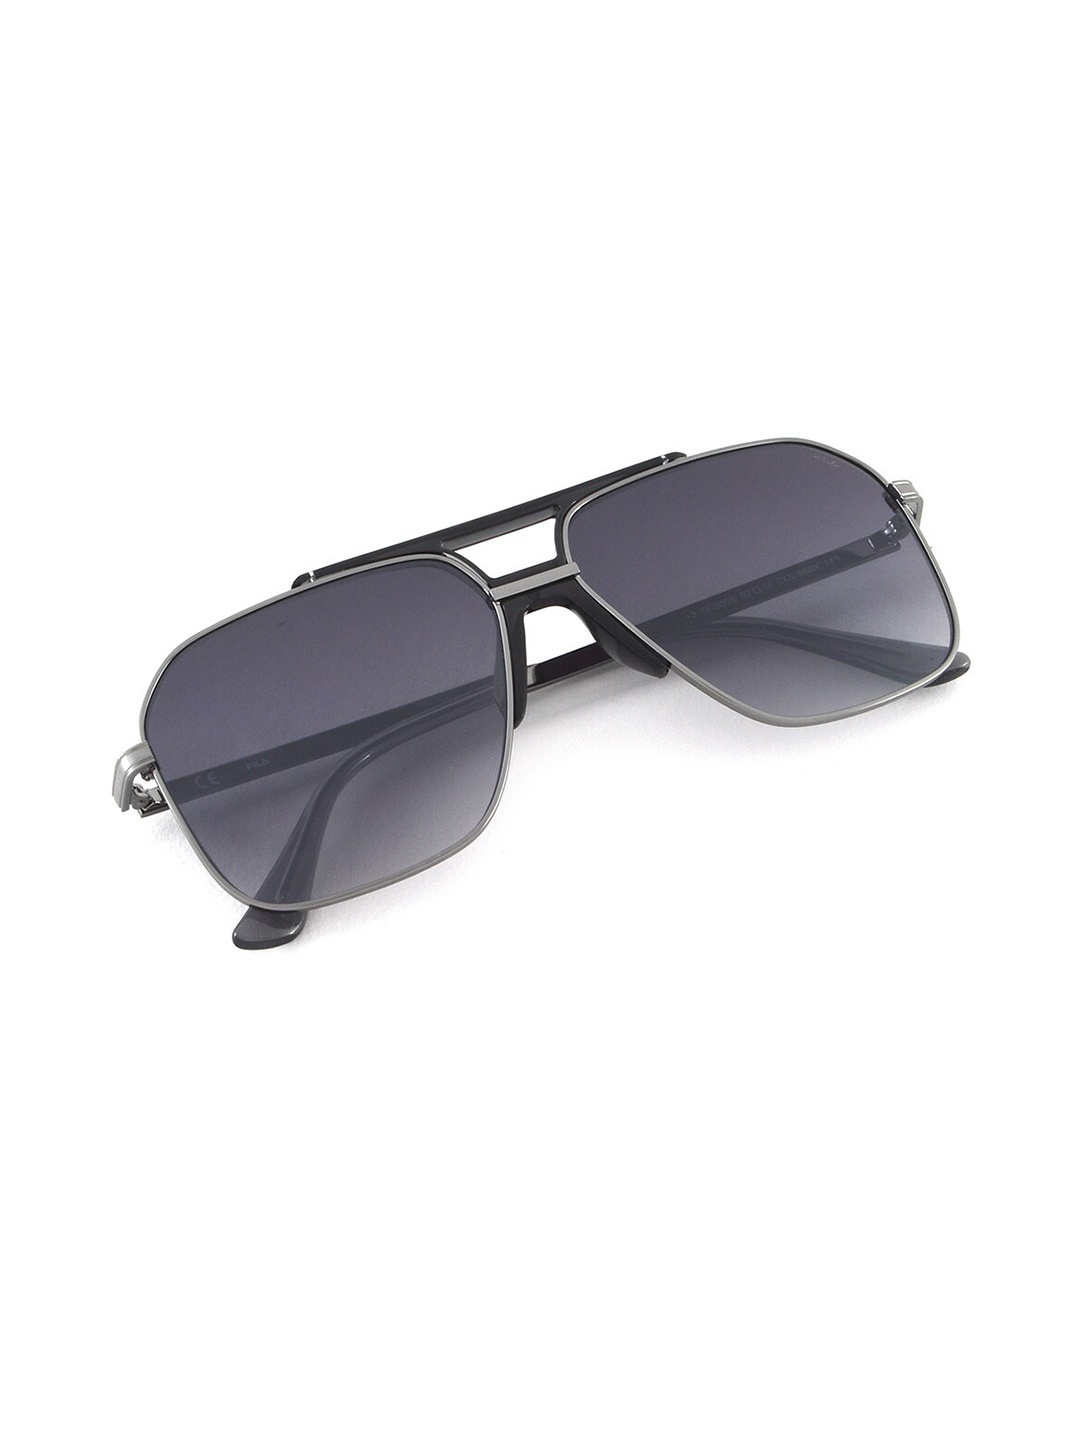 

FILA Men Square Sunglasses with UV Protected Lens SFI506K59568XSG, Grey